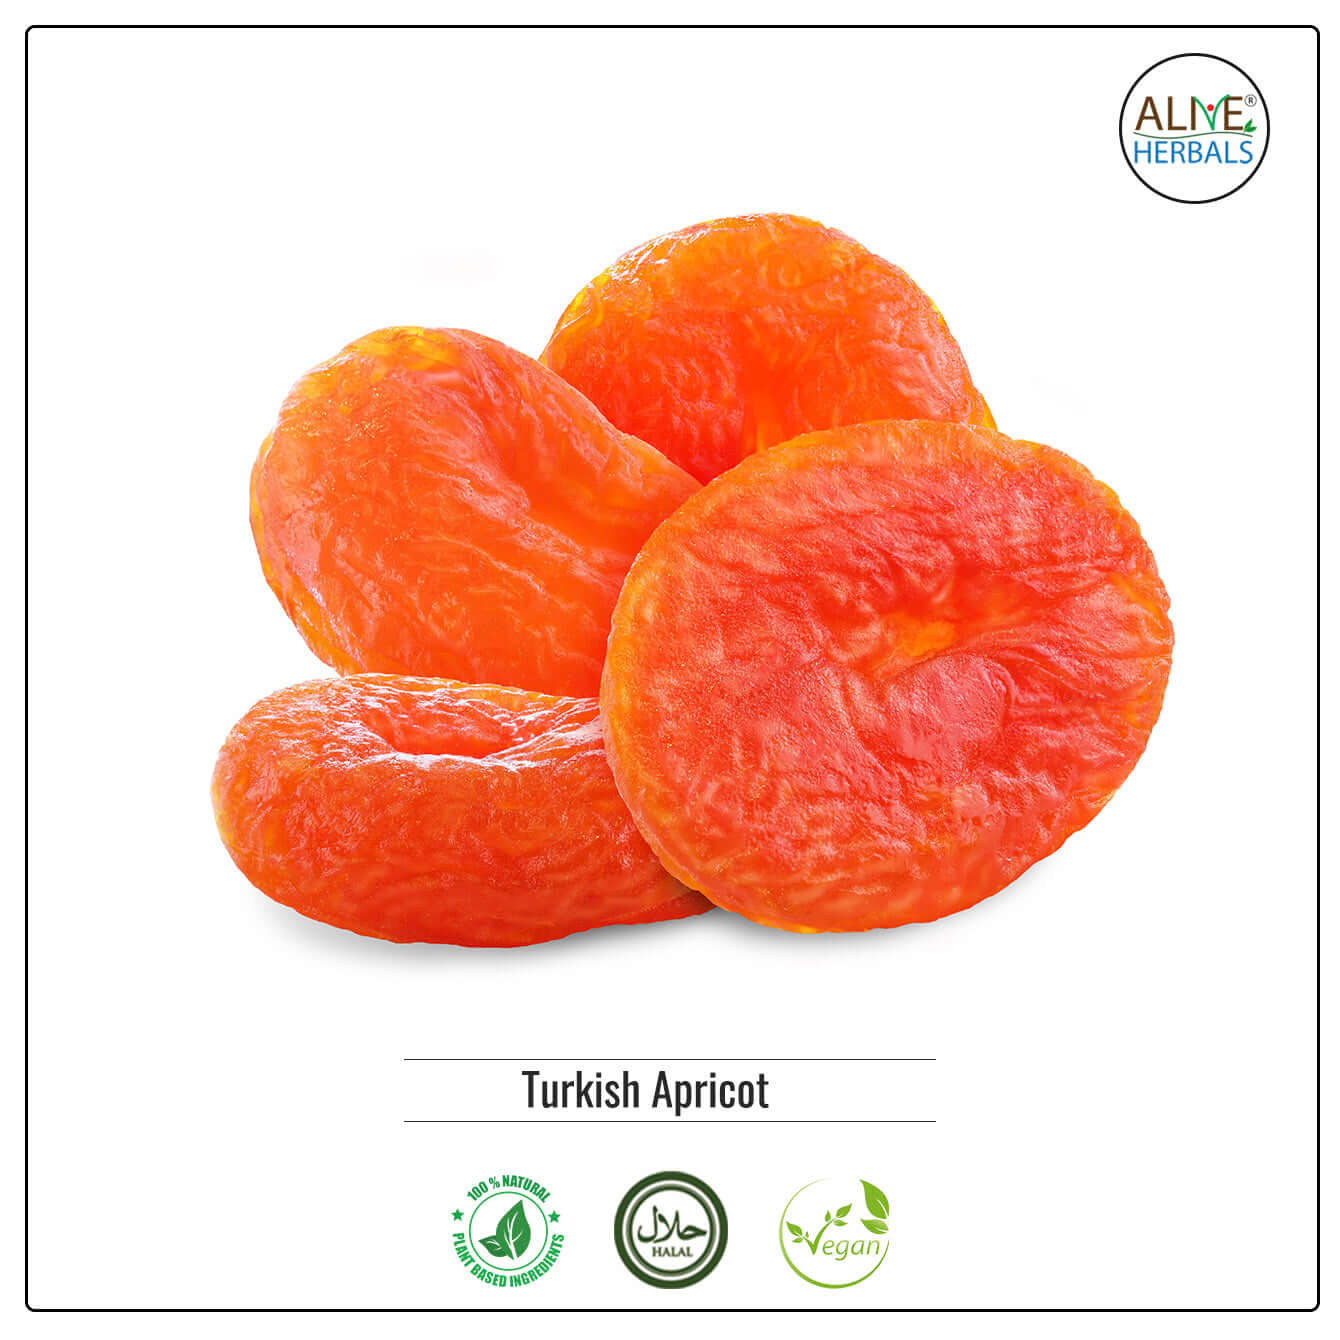 Turkish Apricot - Buy at Natural Food Store | Alive Herbals.